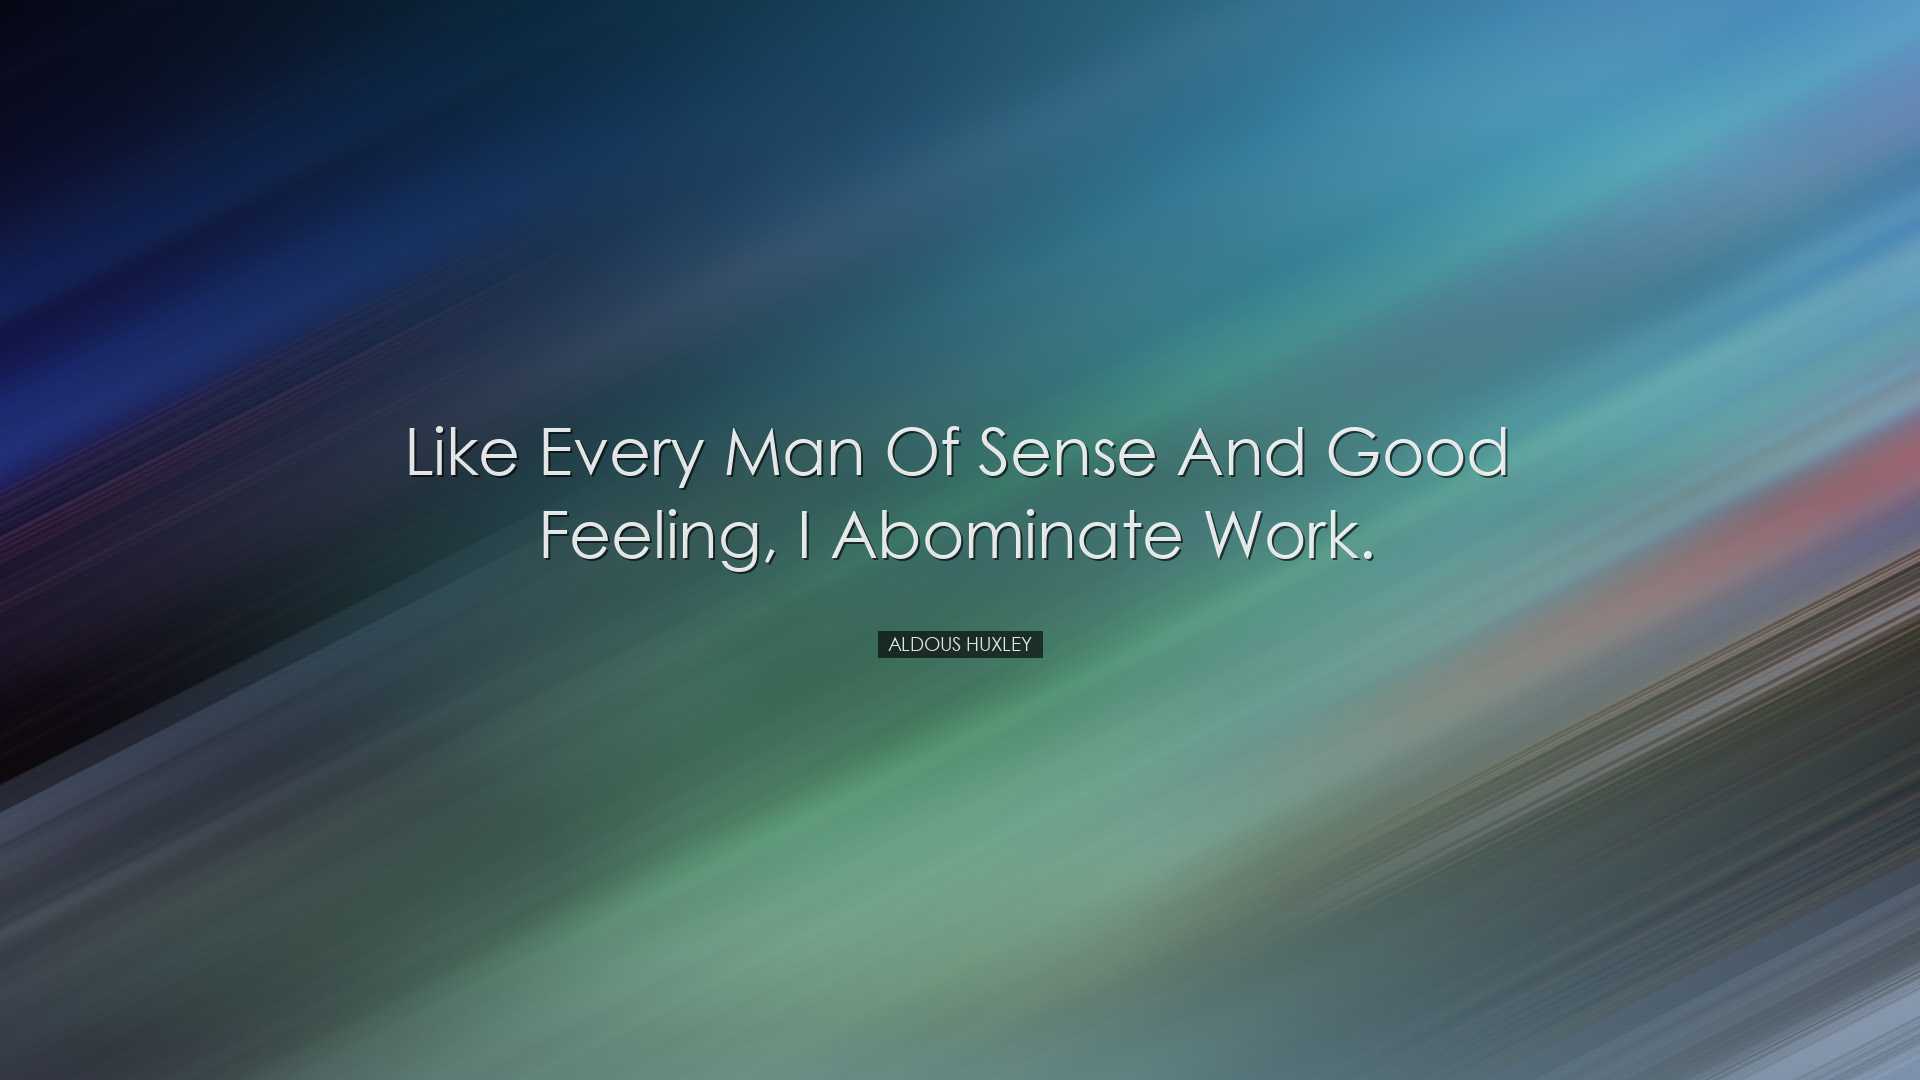 Like every man of sense and good feeling, I abominate work. - Aldo